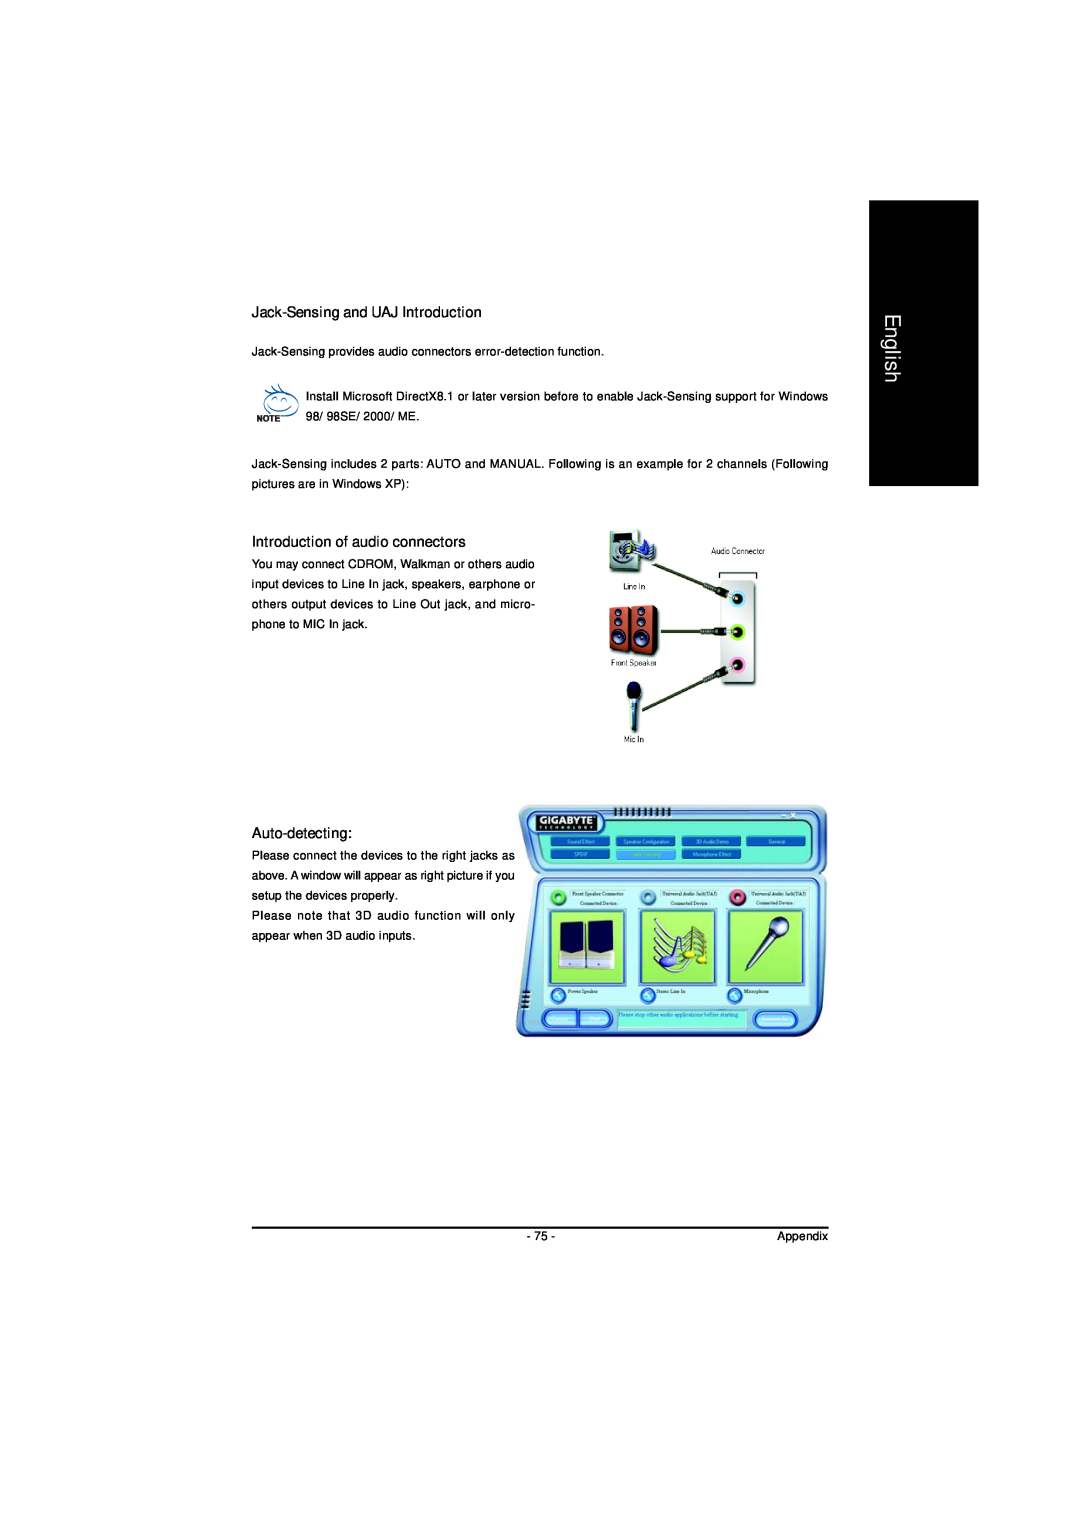 AMD GA-K8NS-939 user manual Jack-Sensing and UAJ Introduction, Introduction of audio connectors, Auto-detecting, English 